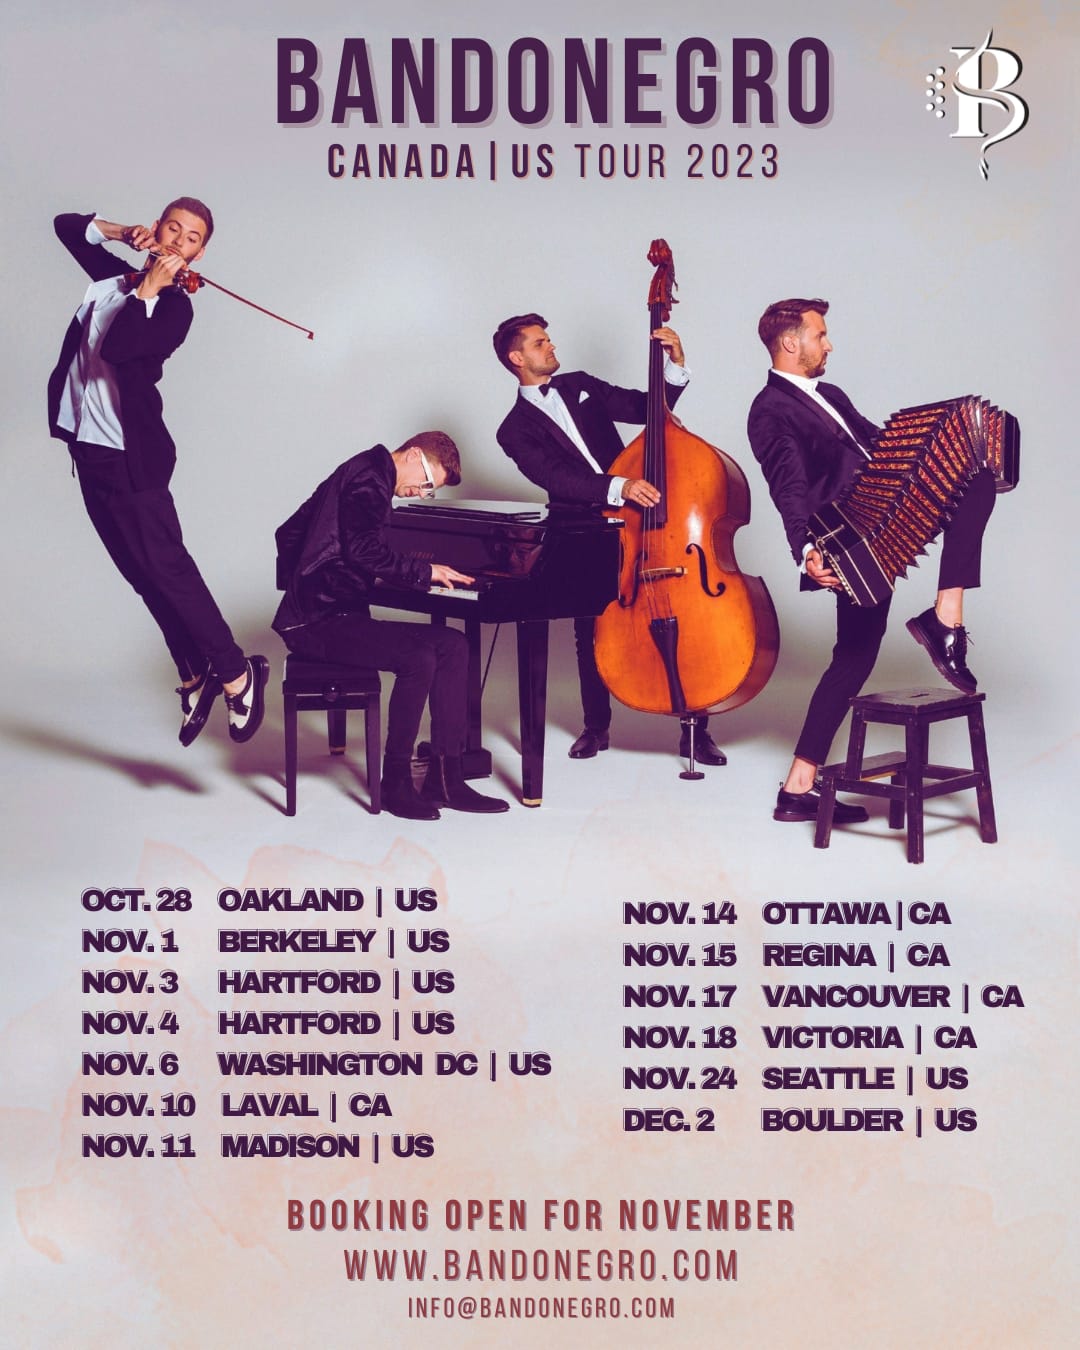 USA & CANADA TOUR – Vancouver